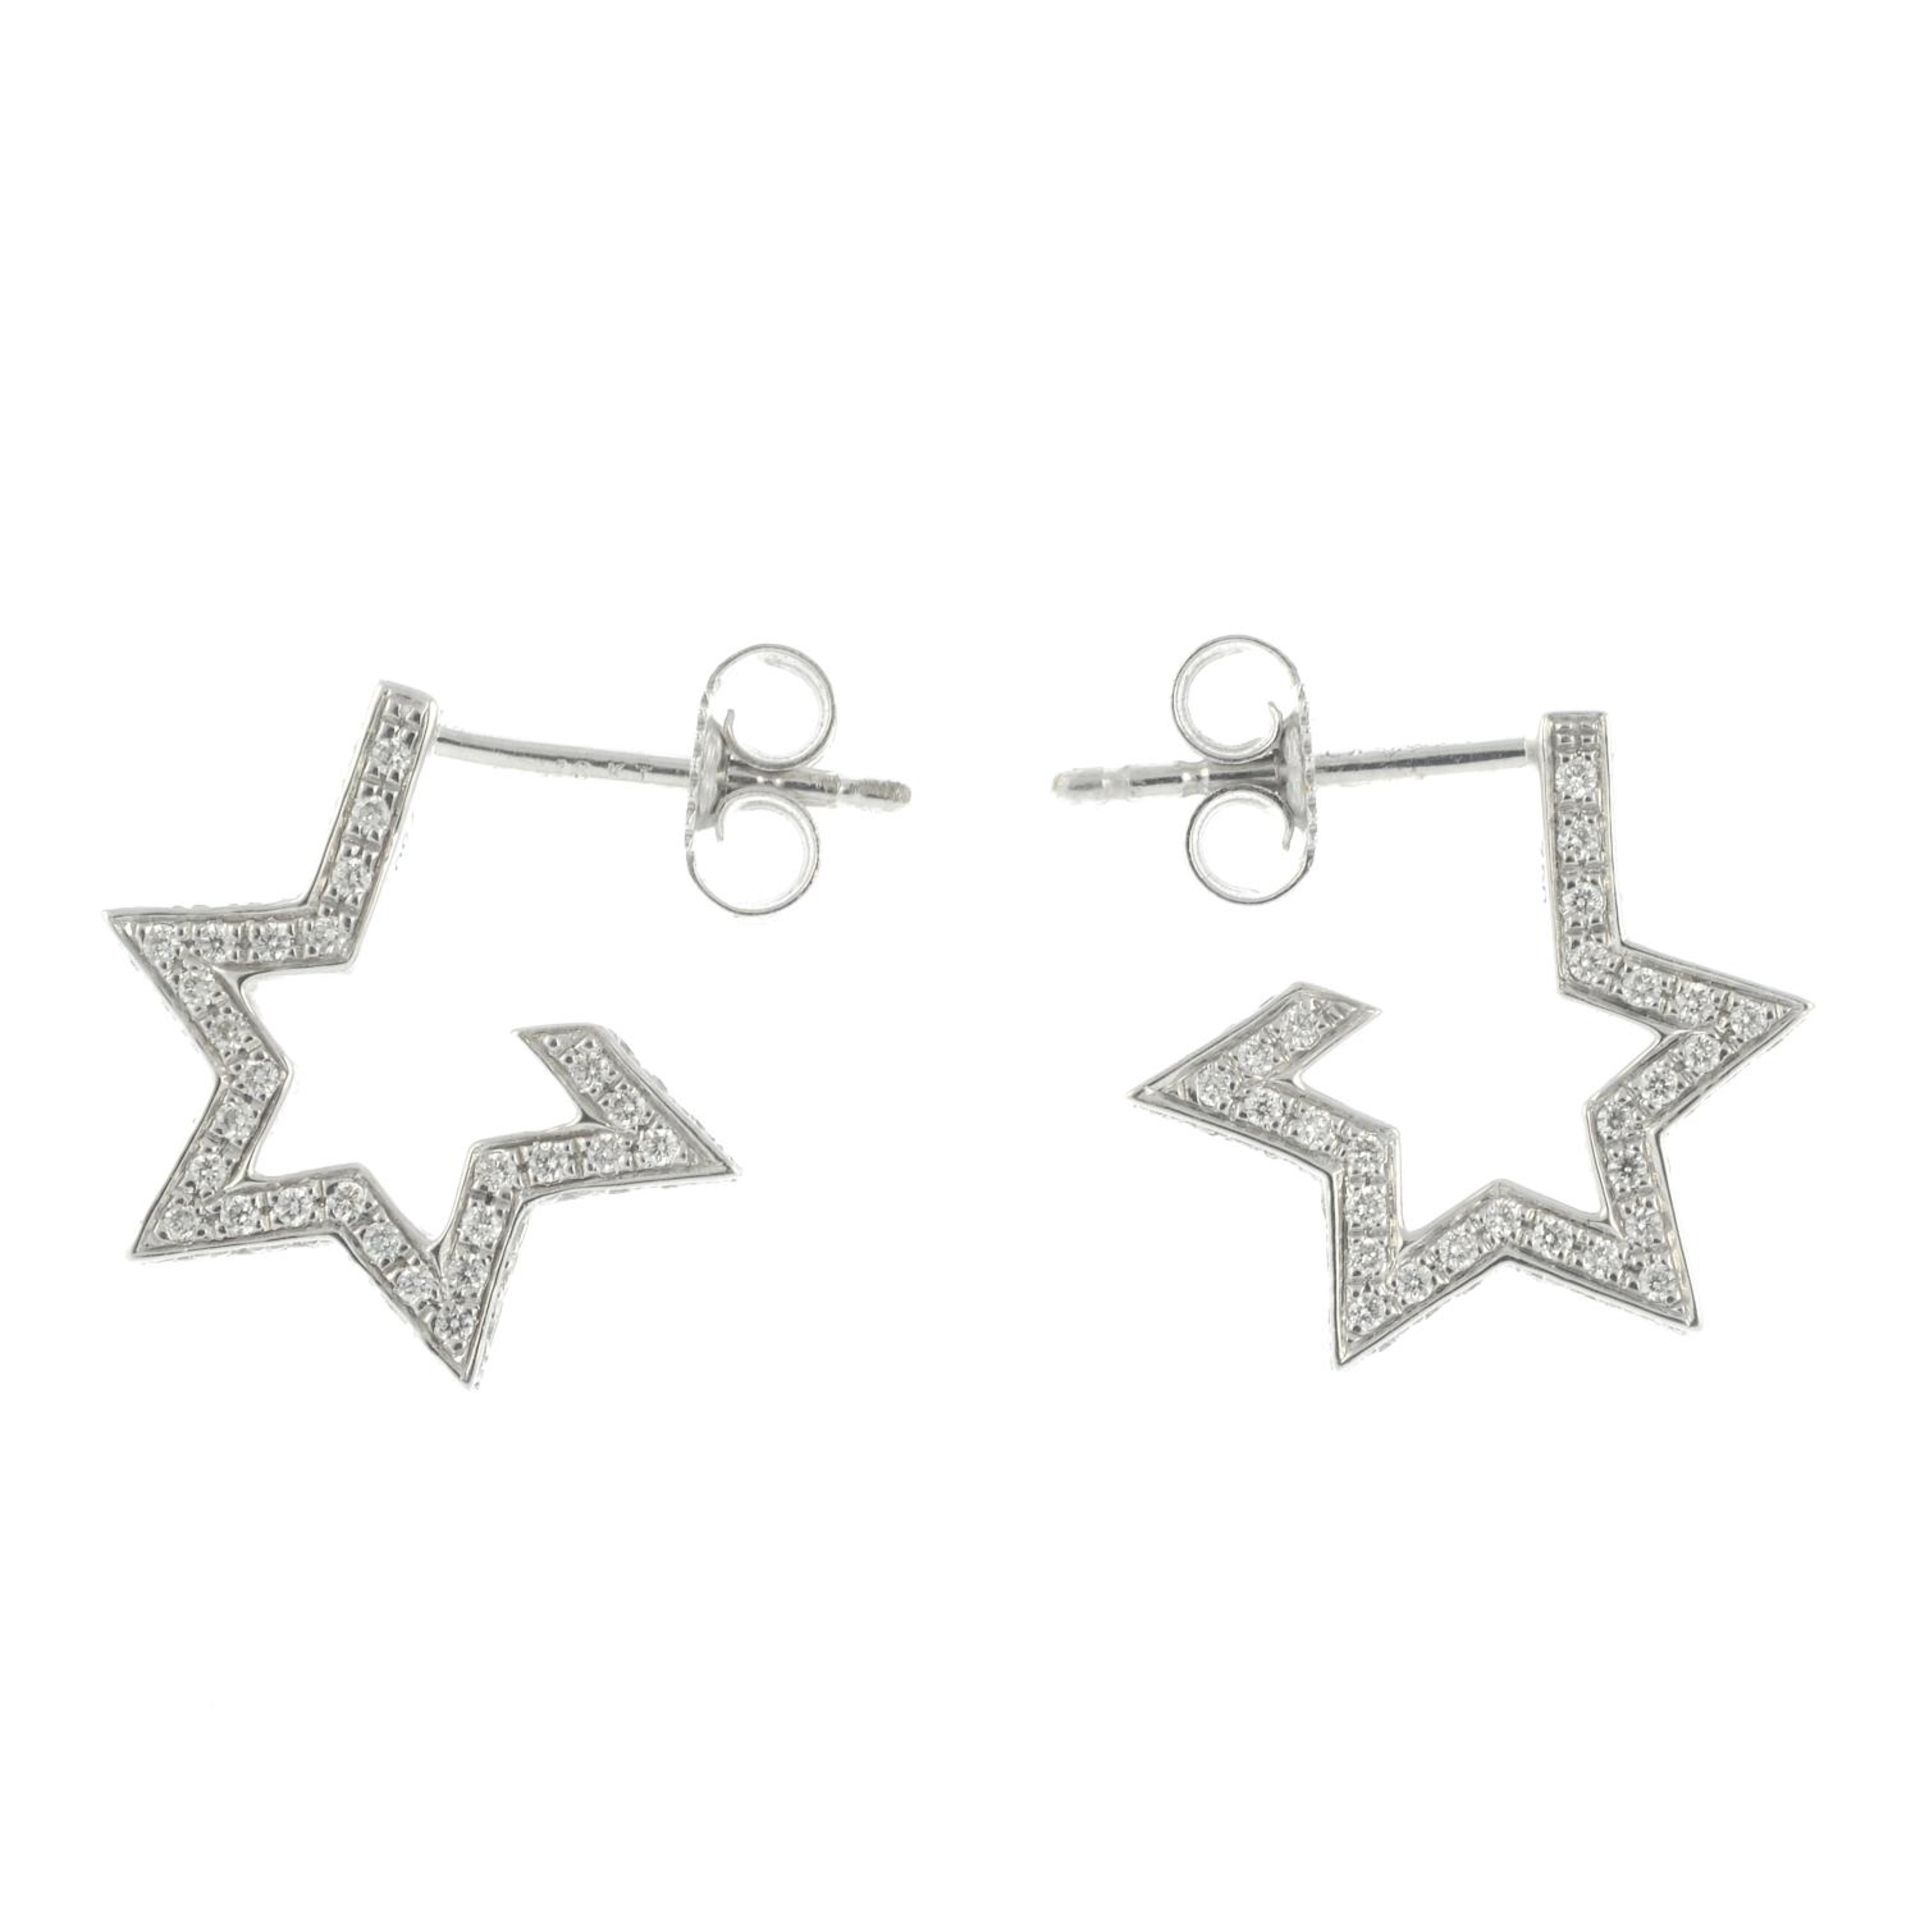 A pair of brilliant-cut diamond star earrings, - Image 2 of 3